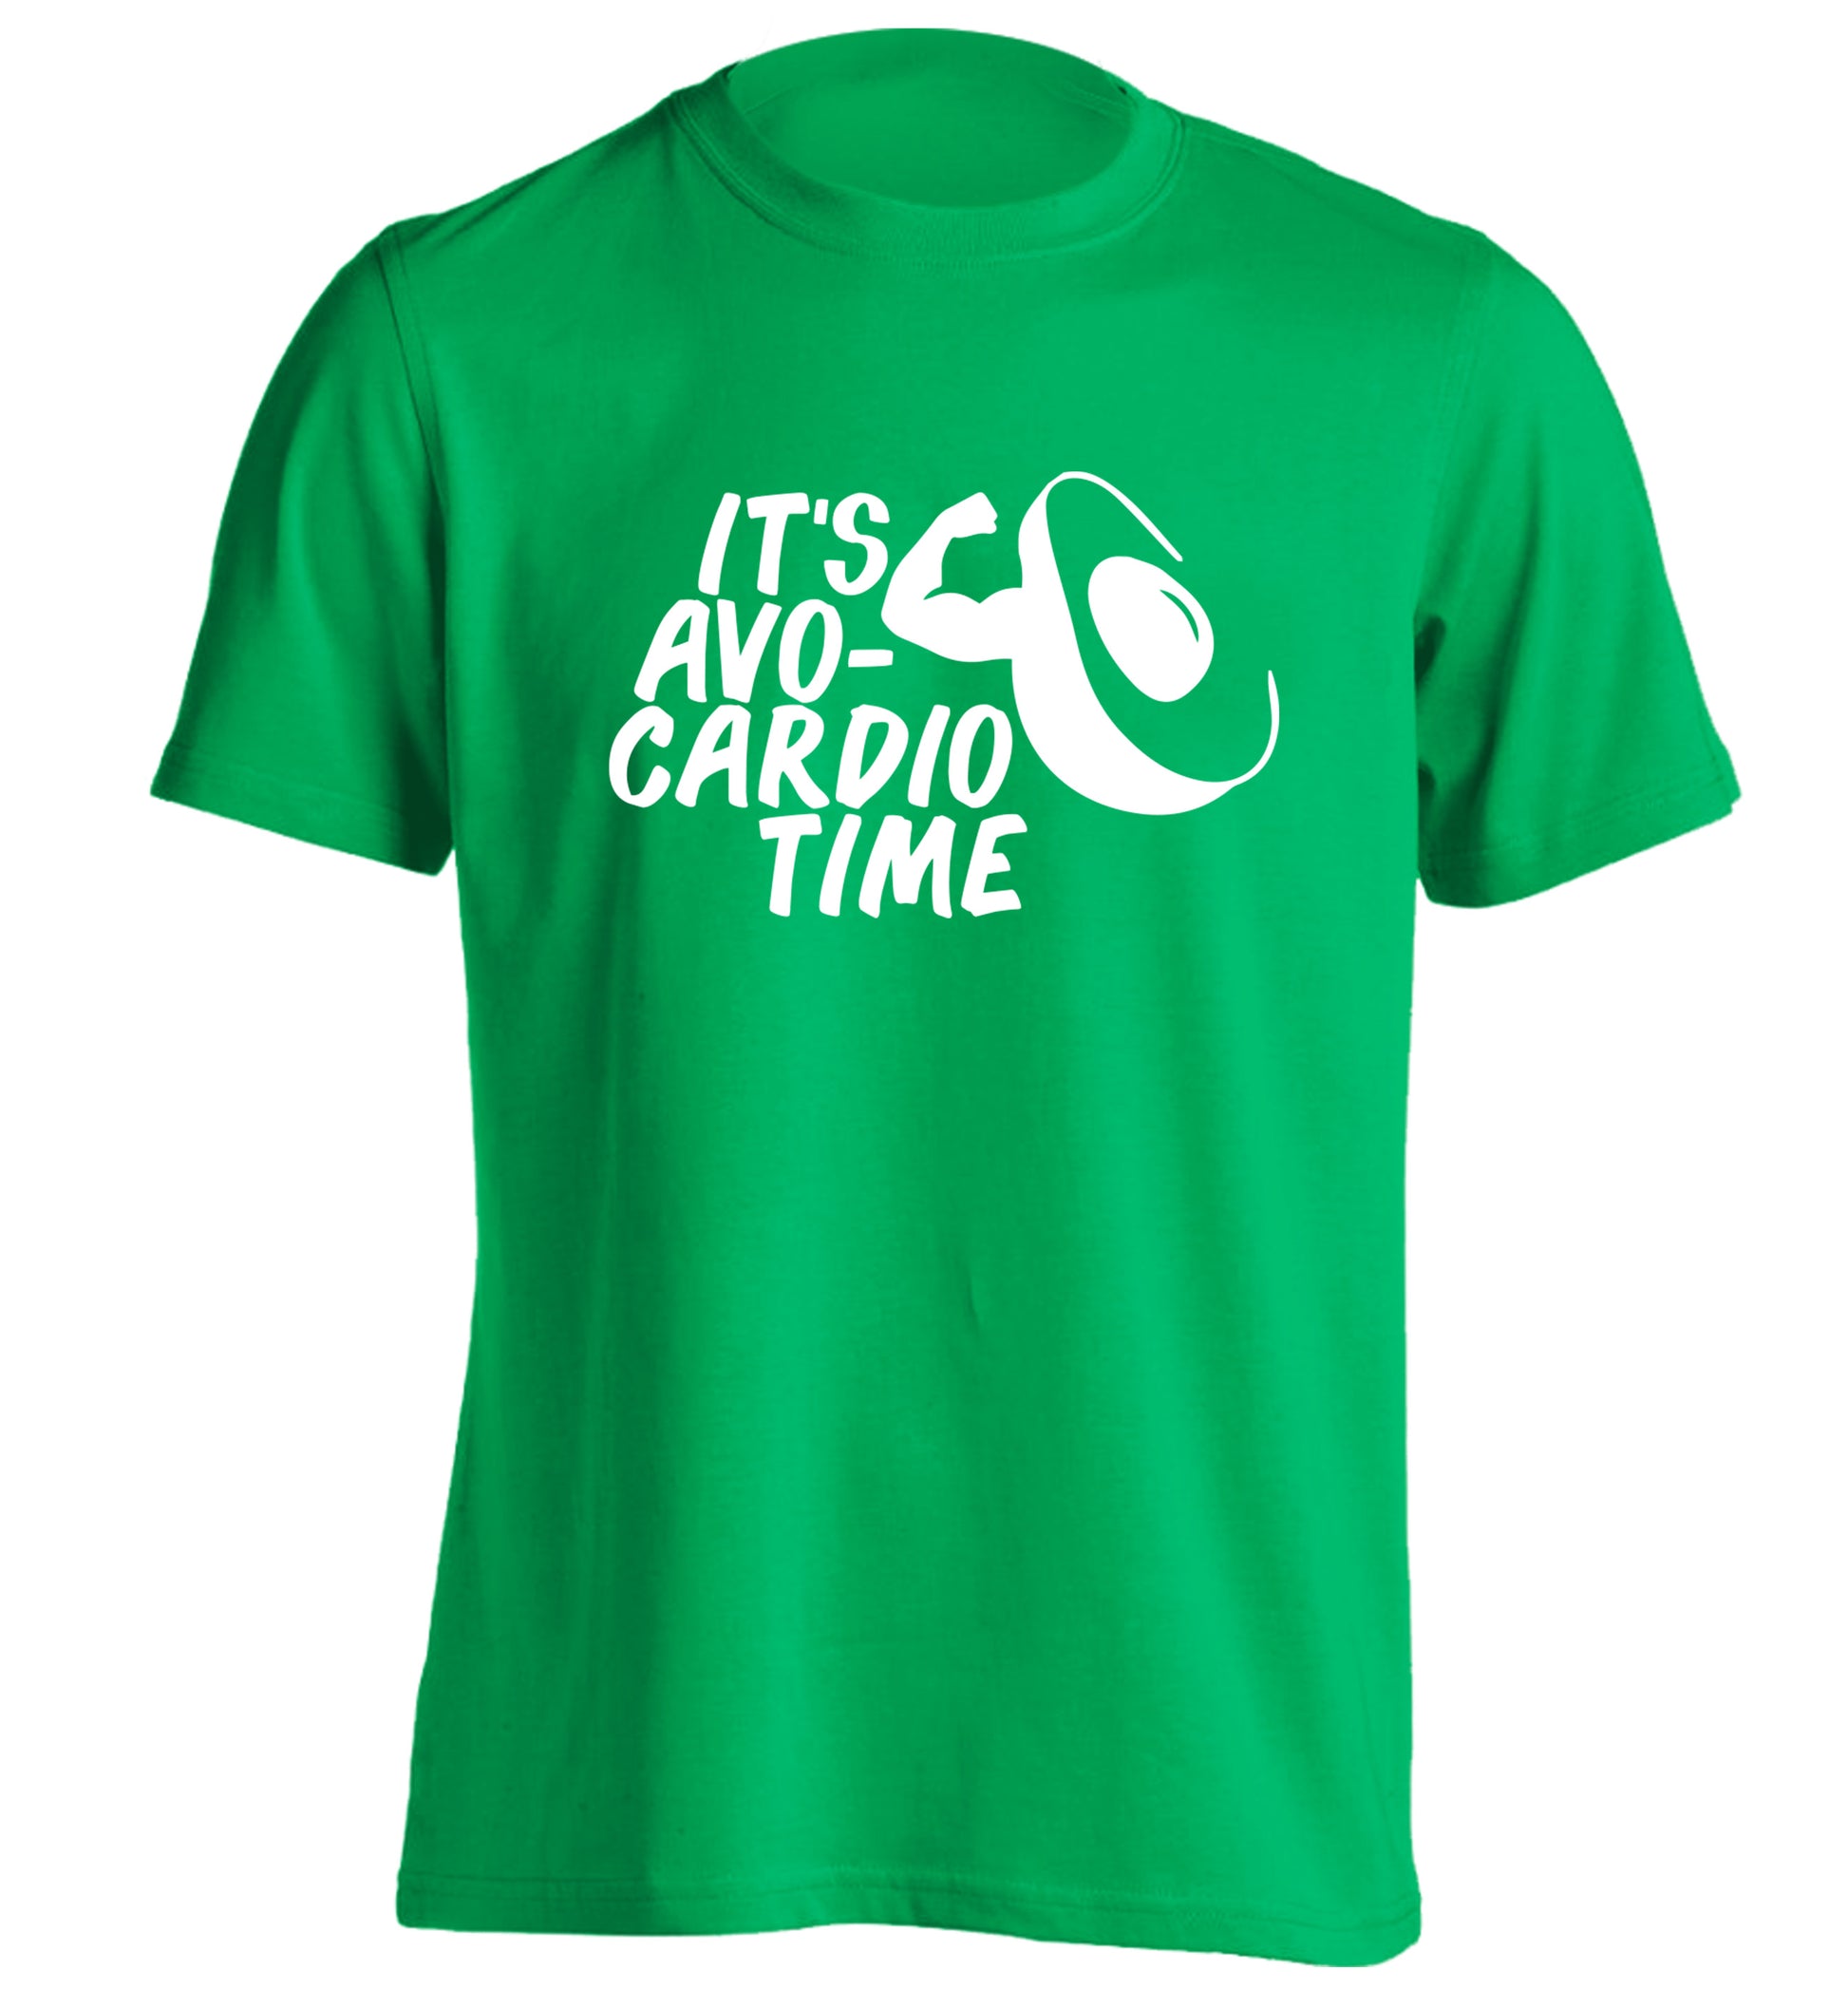 It's avo-cardio time adults unisex green Tshirt 2XL